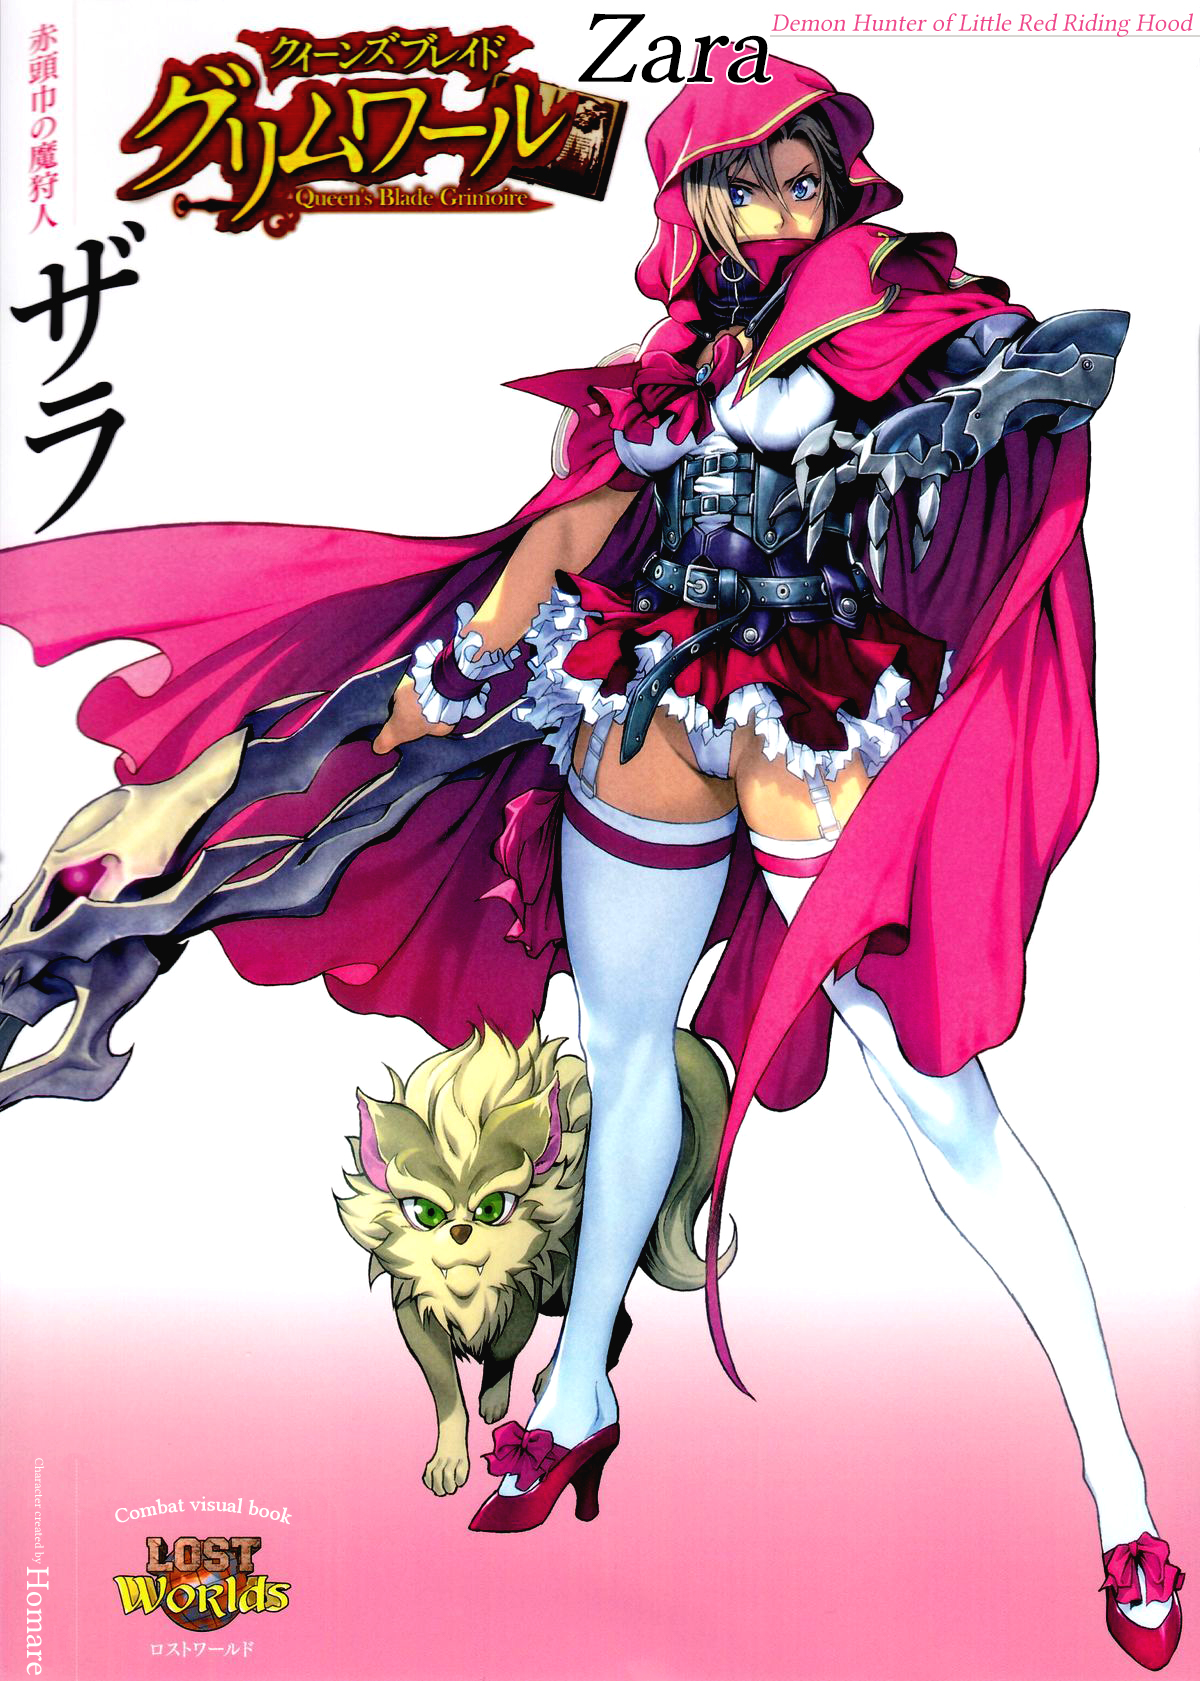 Queens Blade Grimoire Demon Hunter of Little Red Riding Hood Zara English00